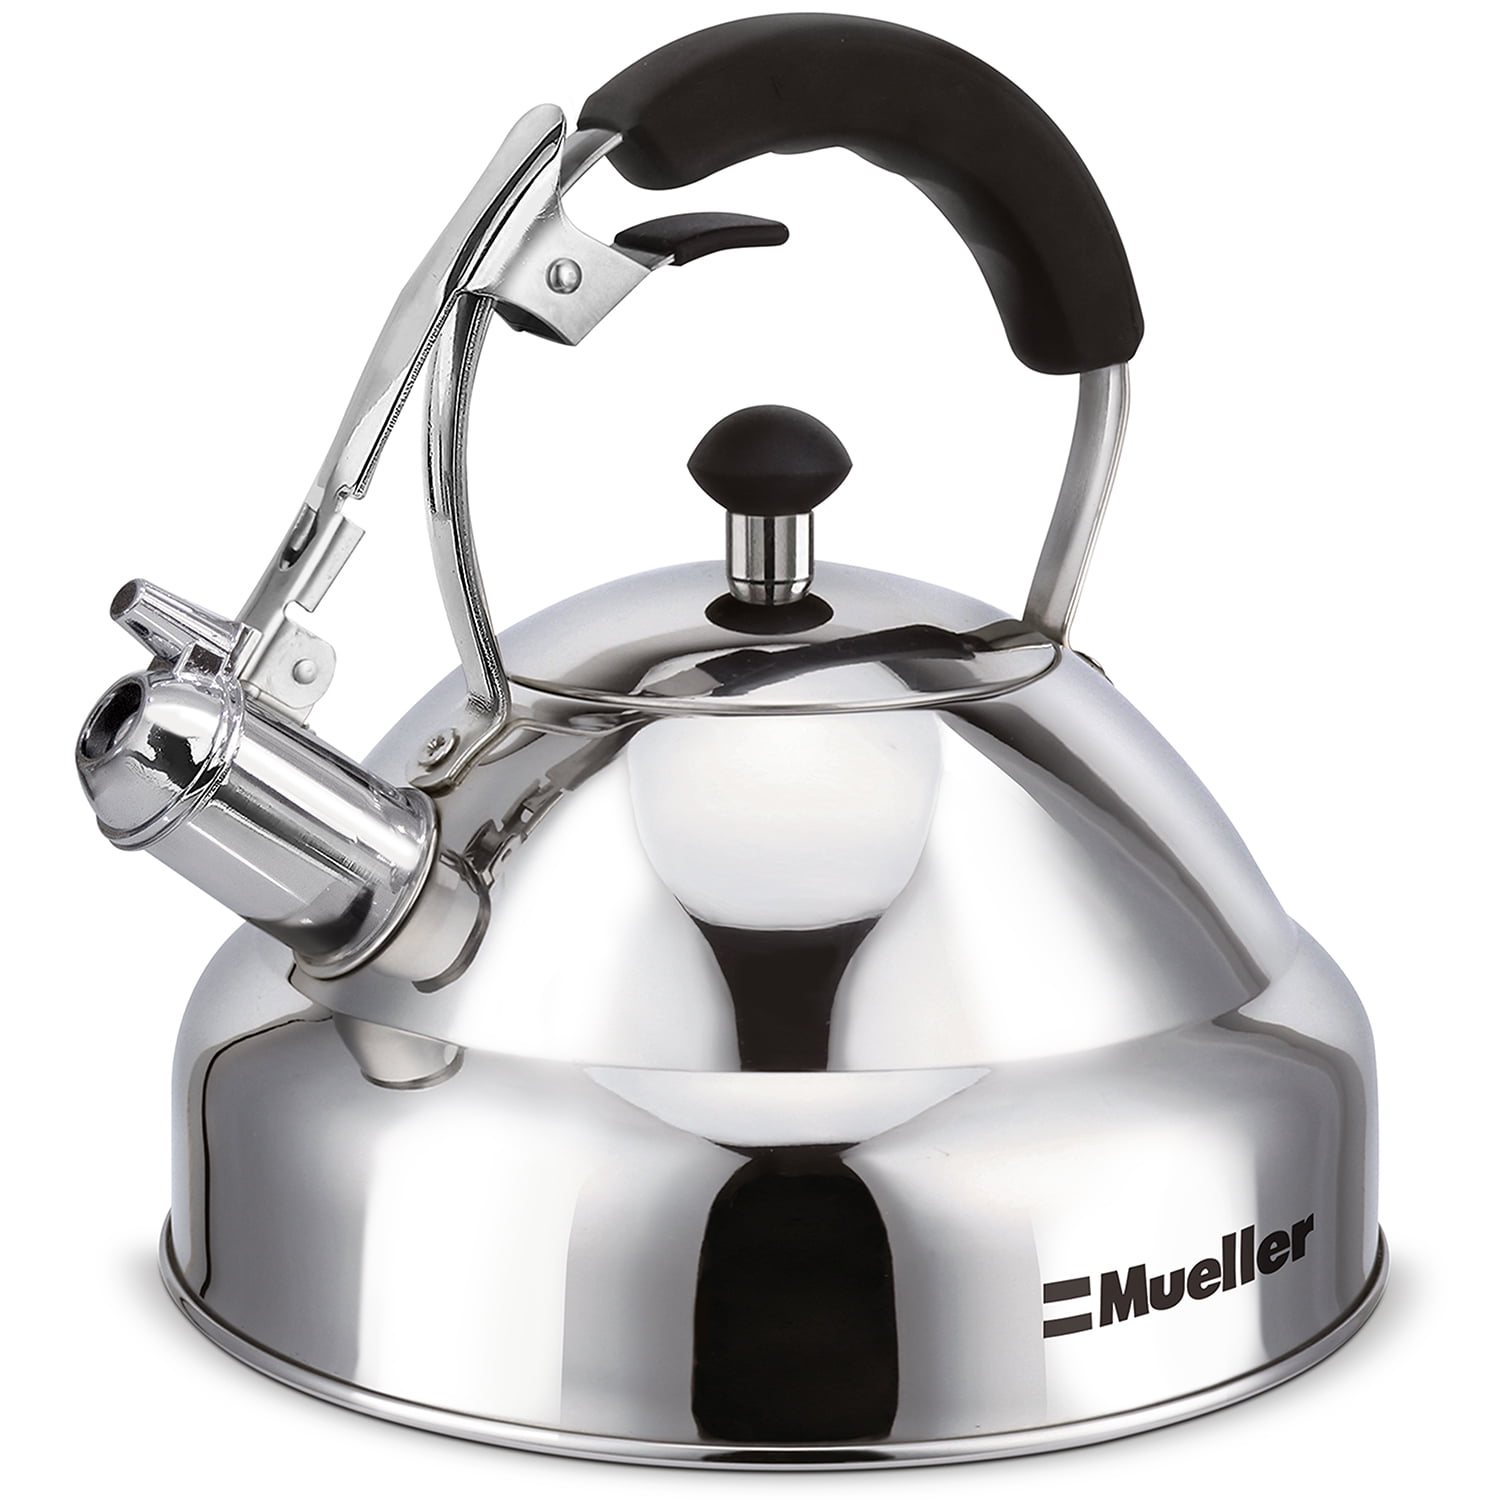 2.64 Quart Whistling Loud Tea Kettle & Tea Pot, Stainless Steel Tea Kettle  for Stove top - Yahoo Shopping